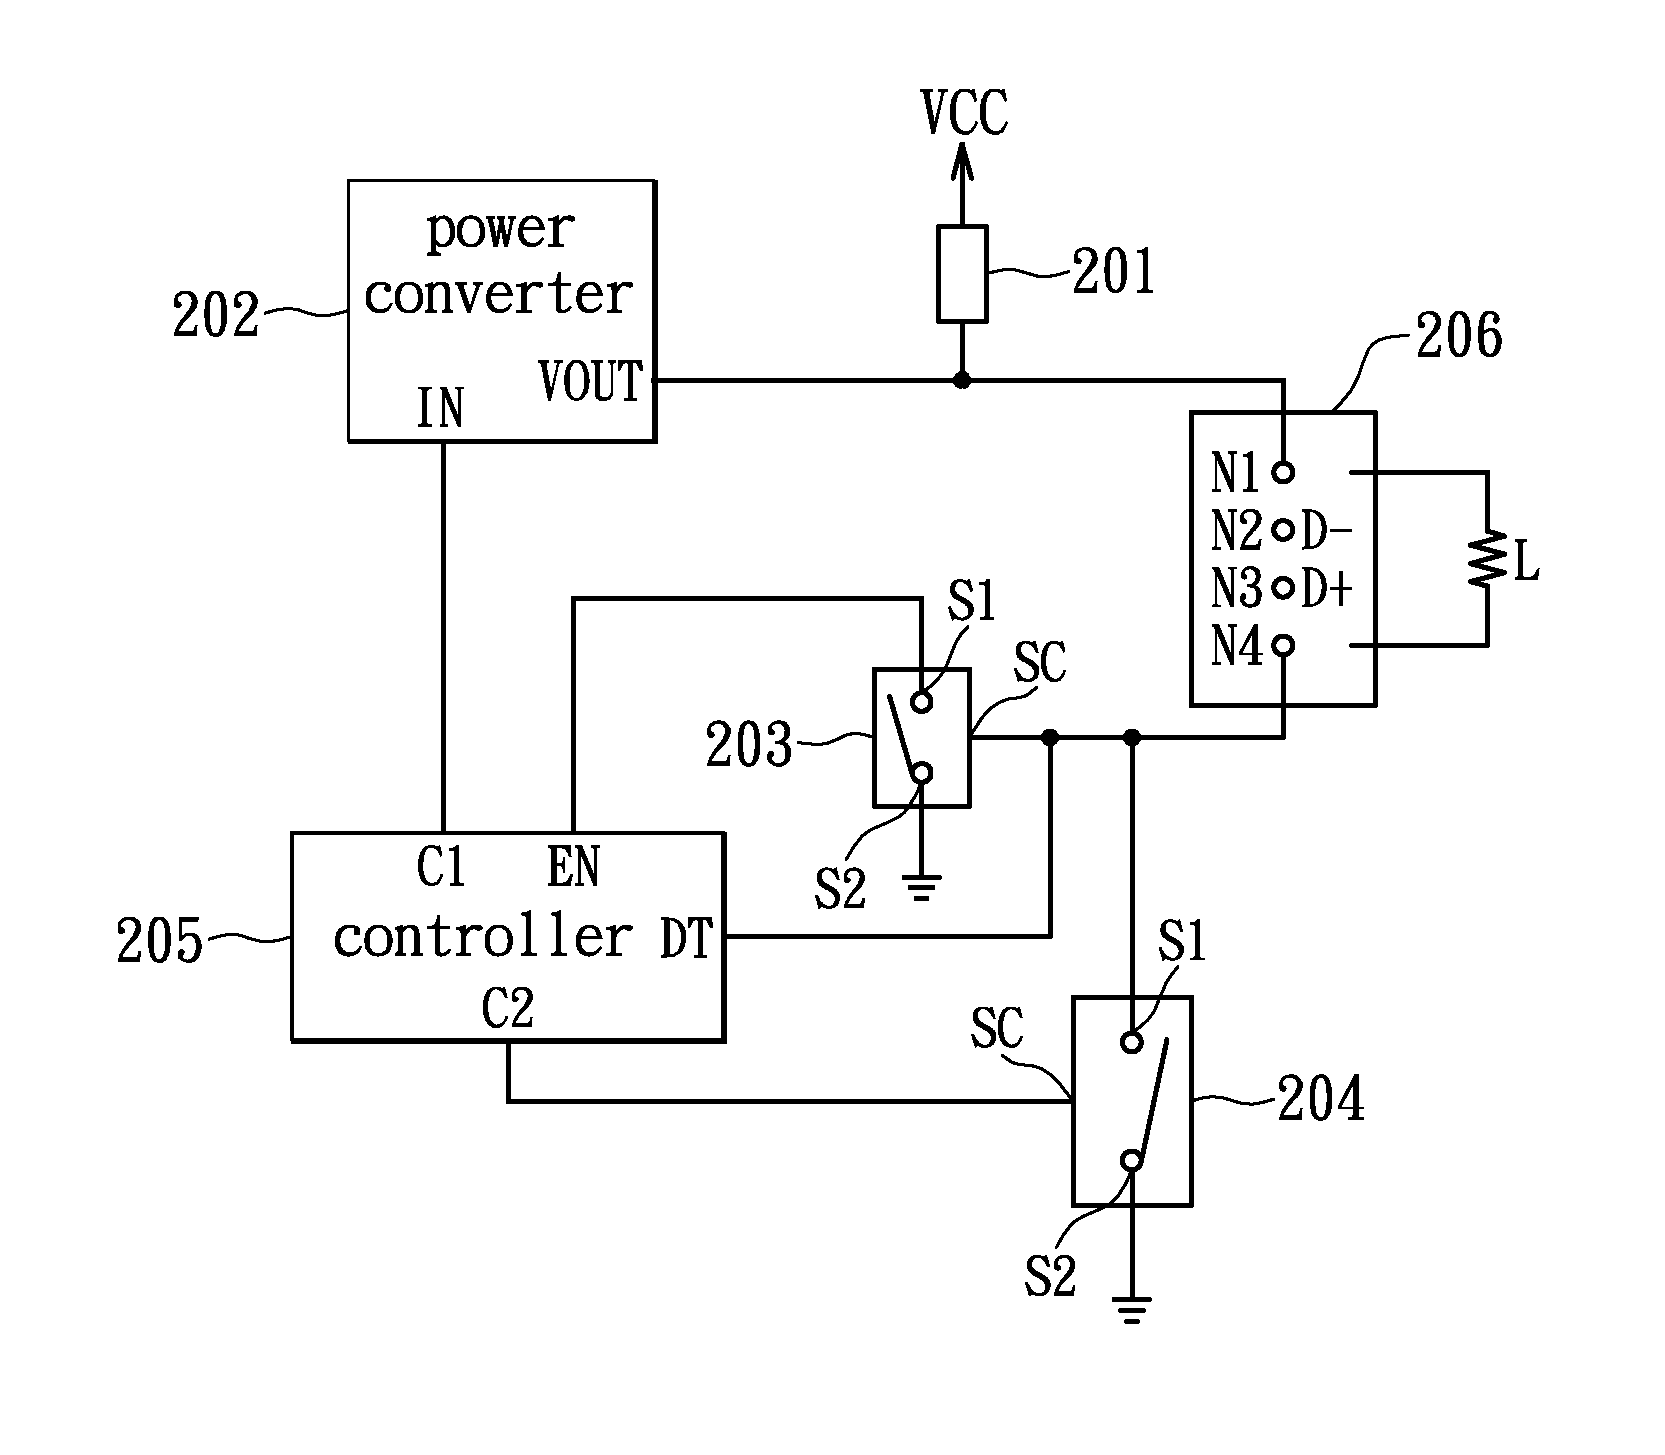 Circuit protection apparatus